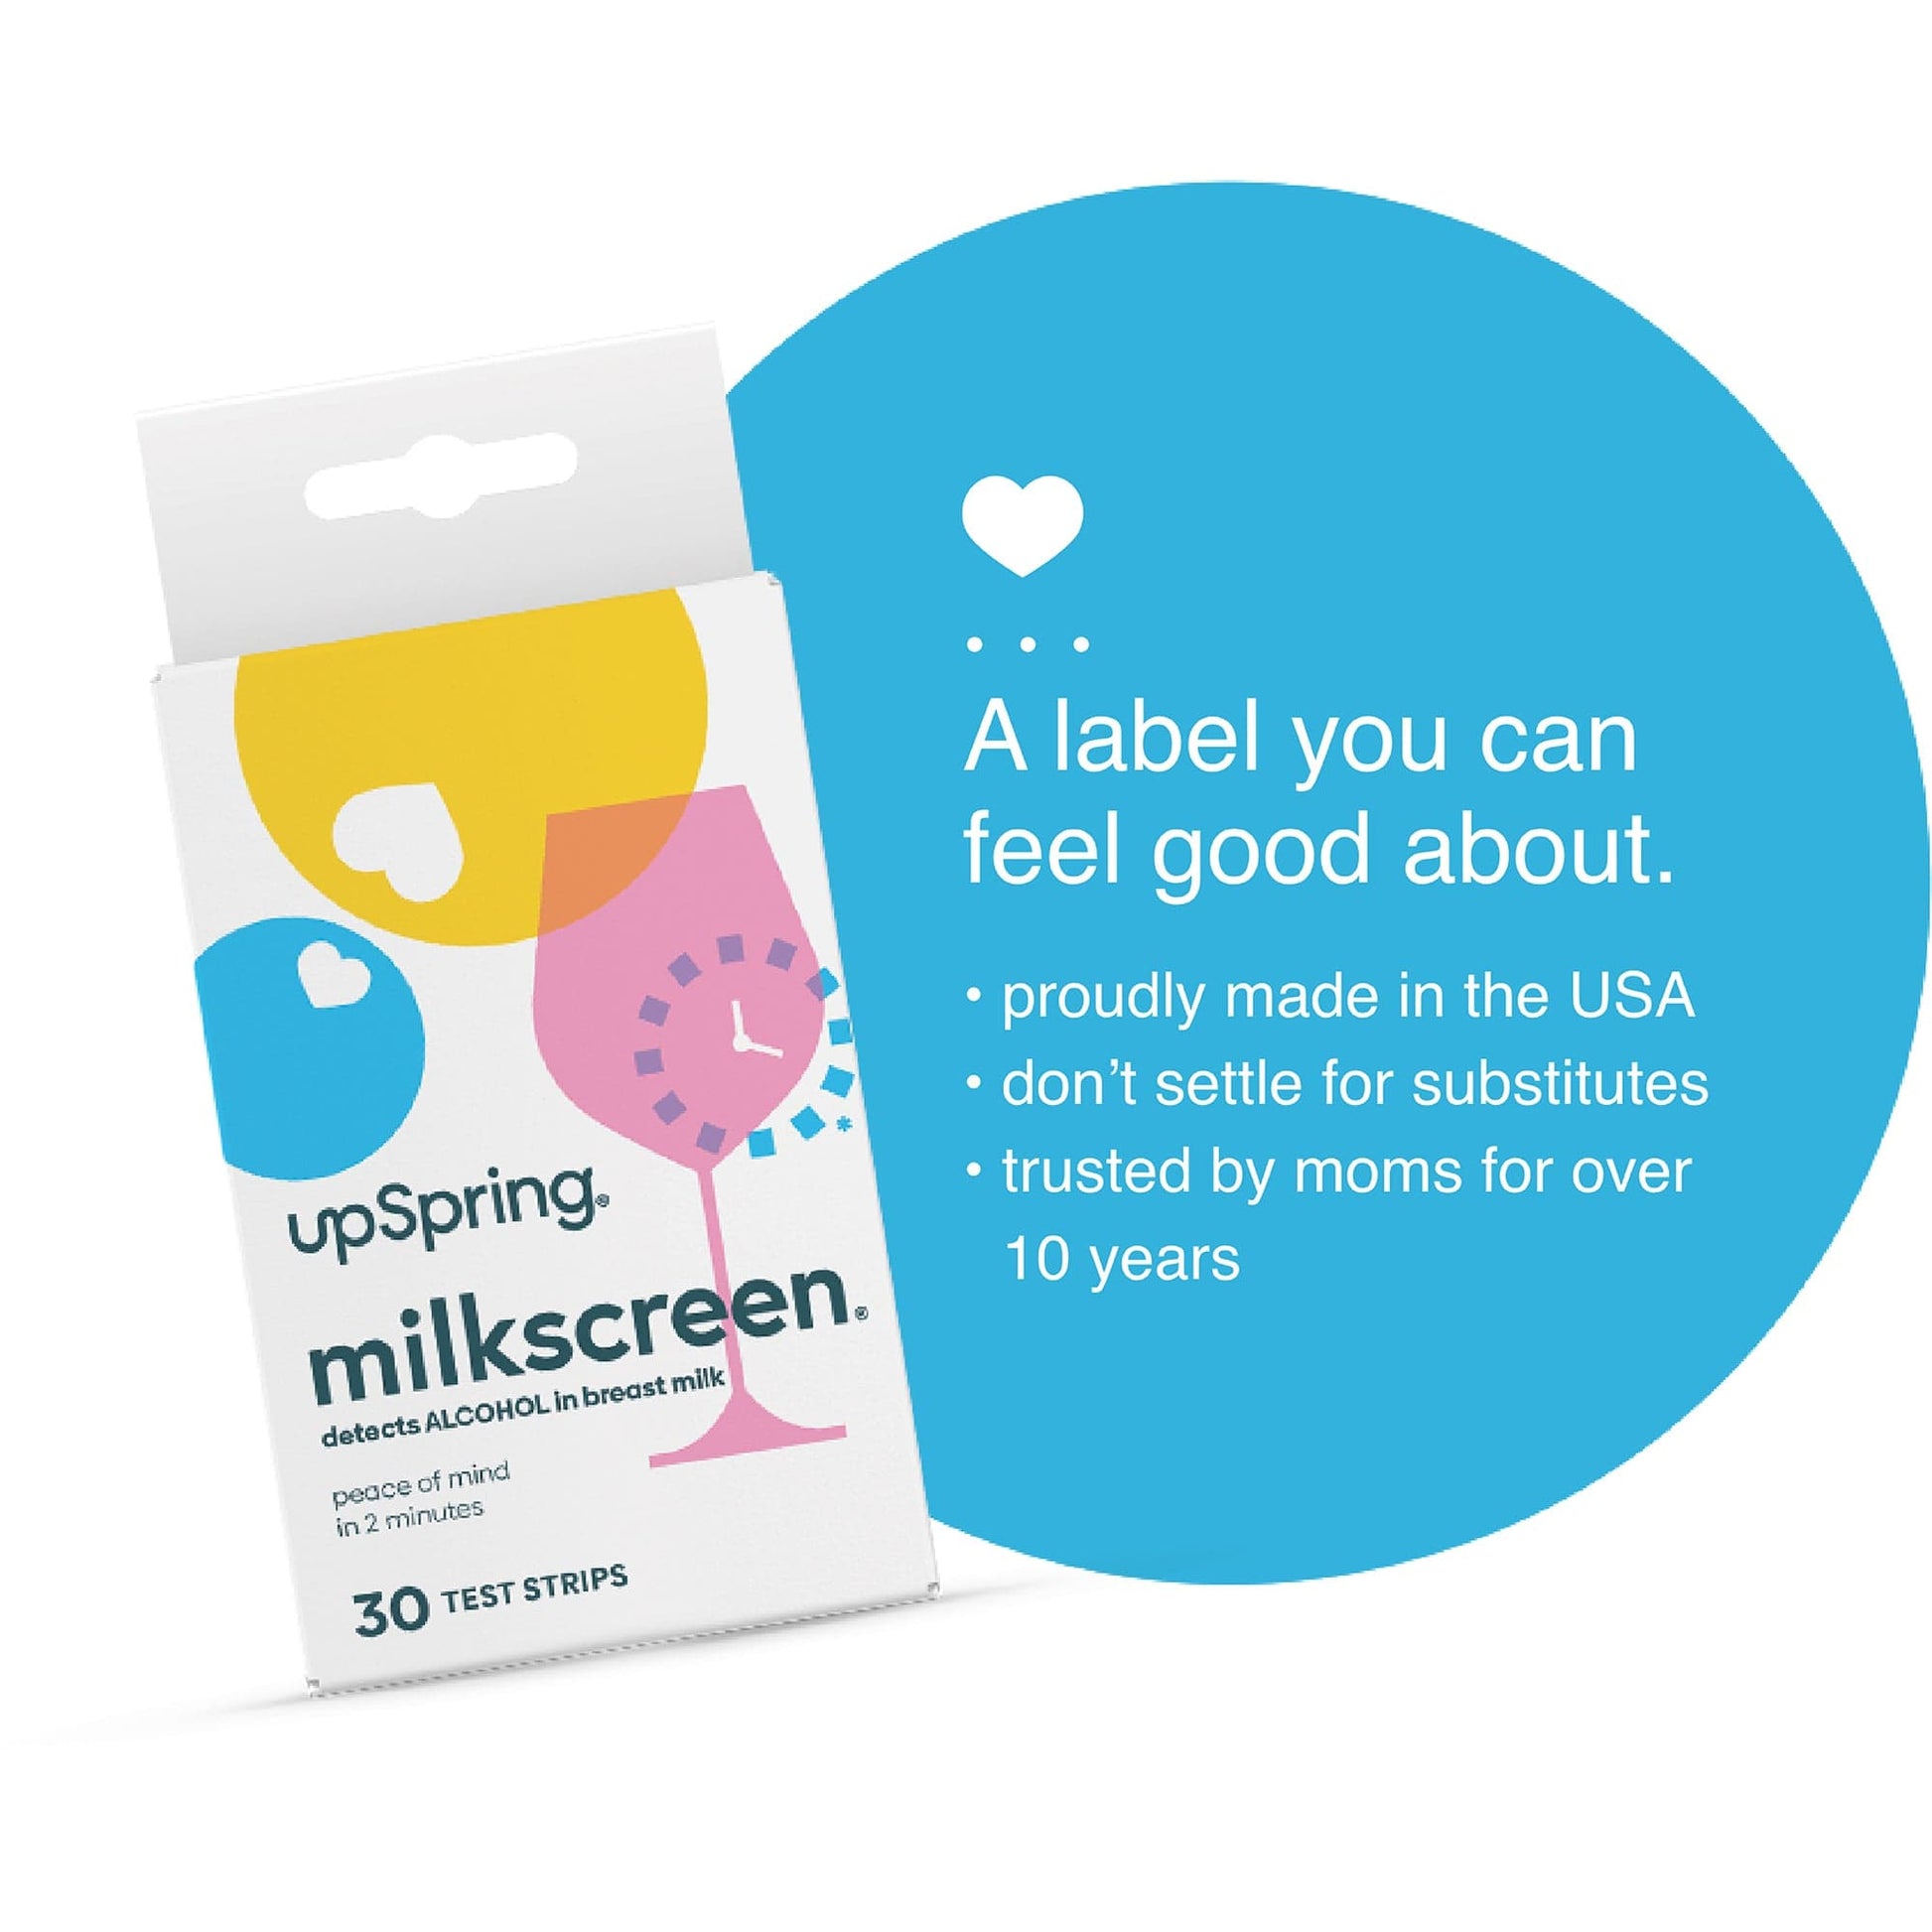 UpSpring Milkscreen Test for Alcohol in Breast Milk, 20-Pack